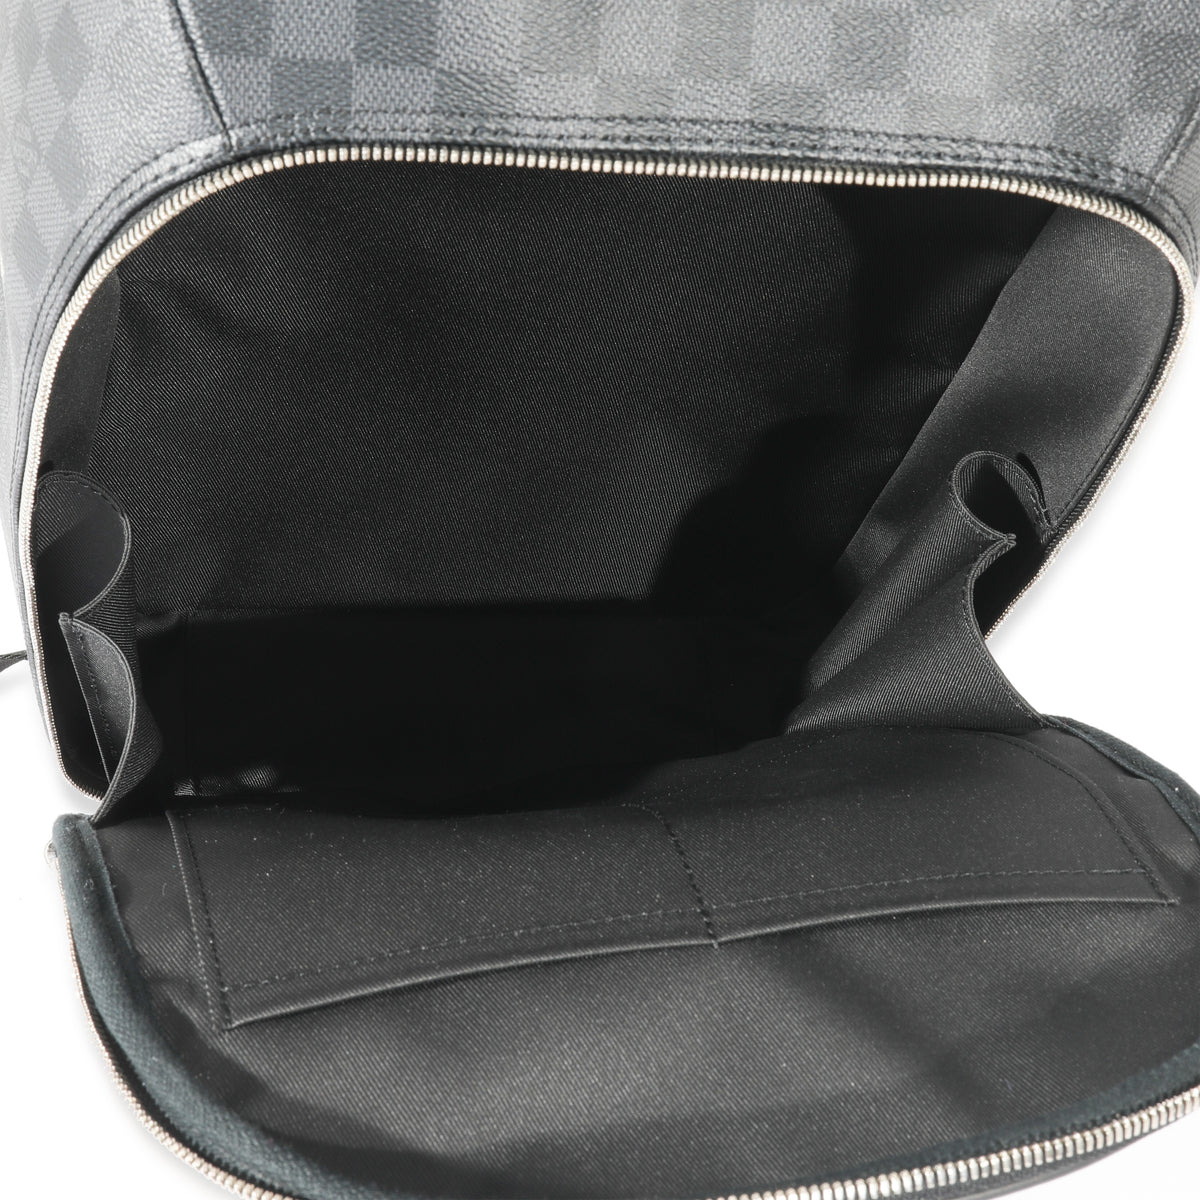 Louis Vuitton Damier Graphite Michael NV2 Backpack